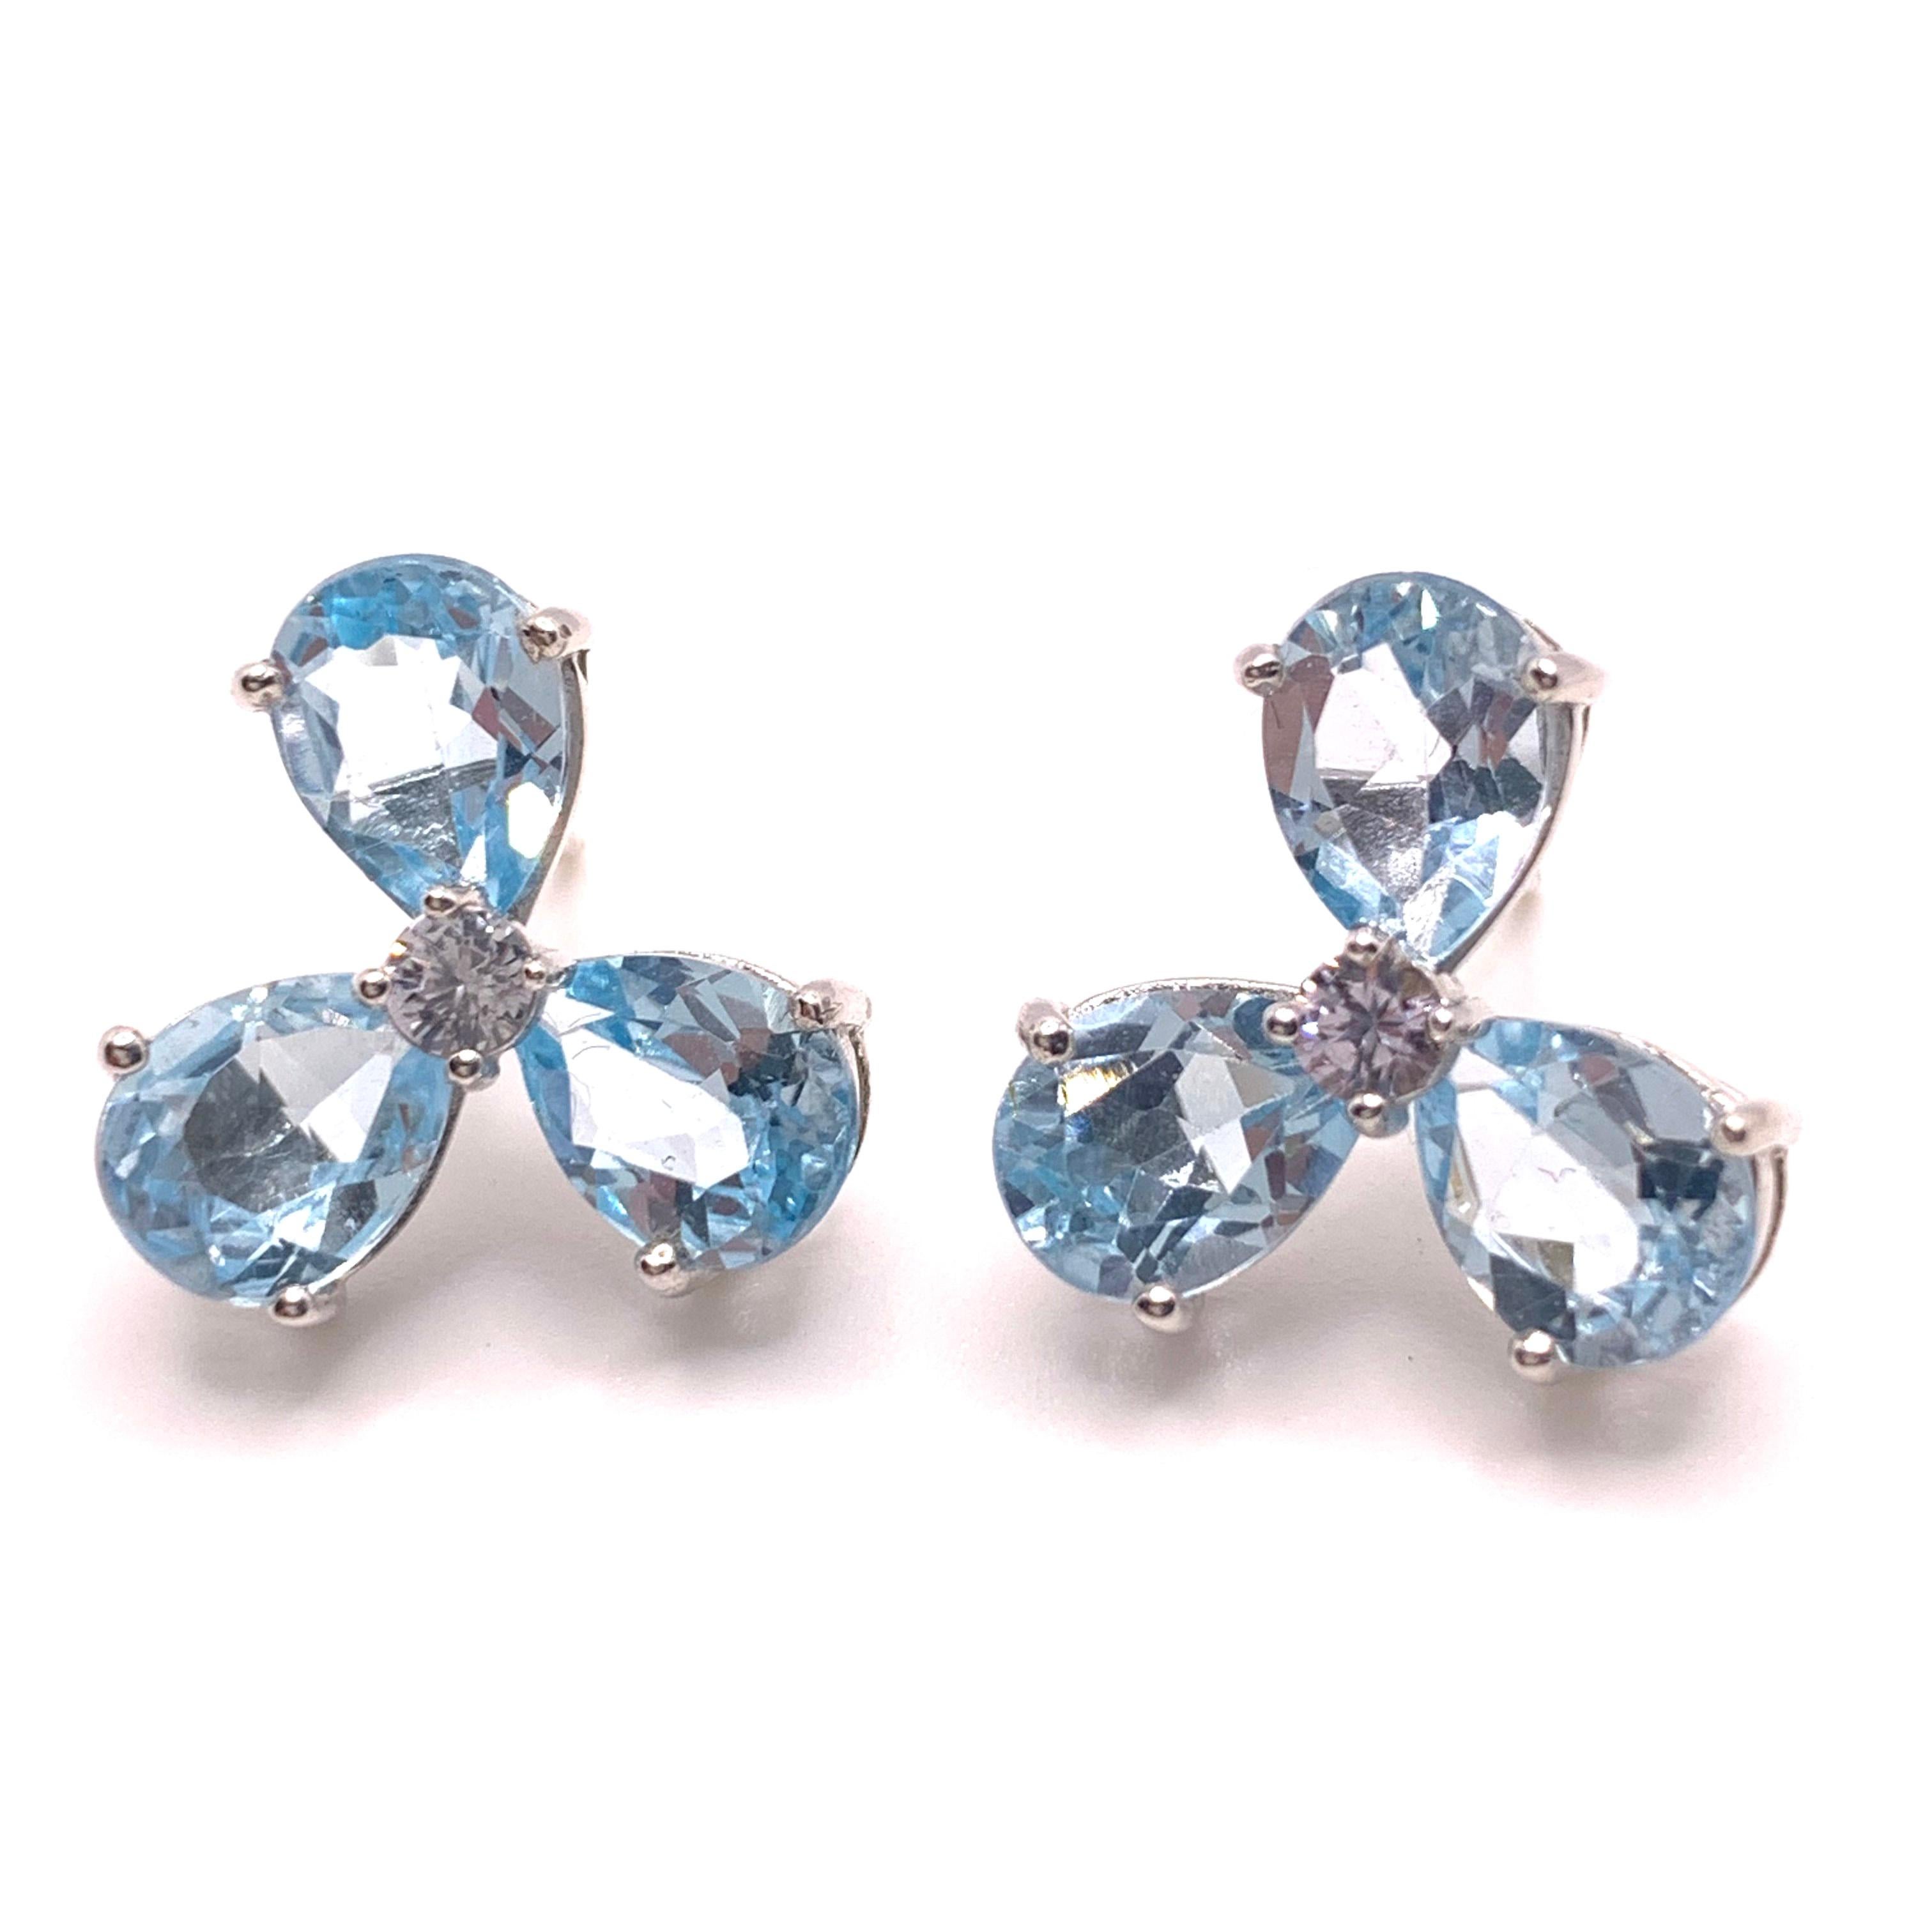 Contemporary Stunning pair of Three-petal Genuine Blue Topaz Flower Earrings